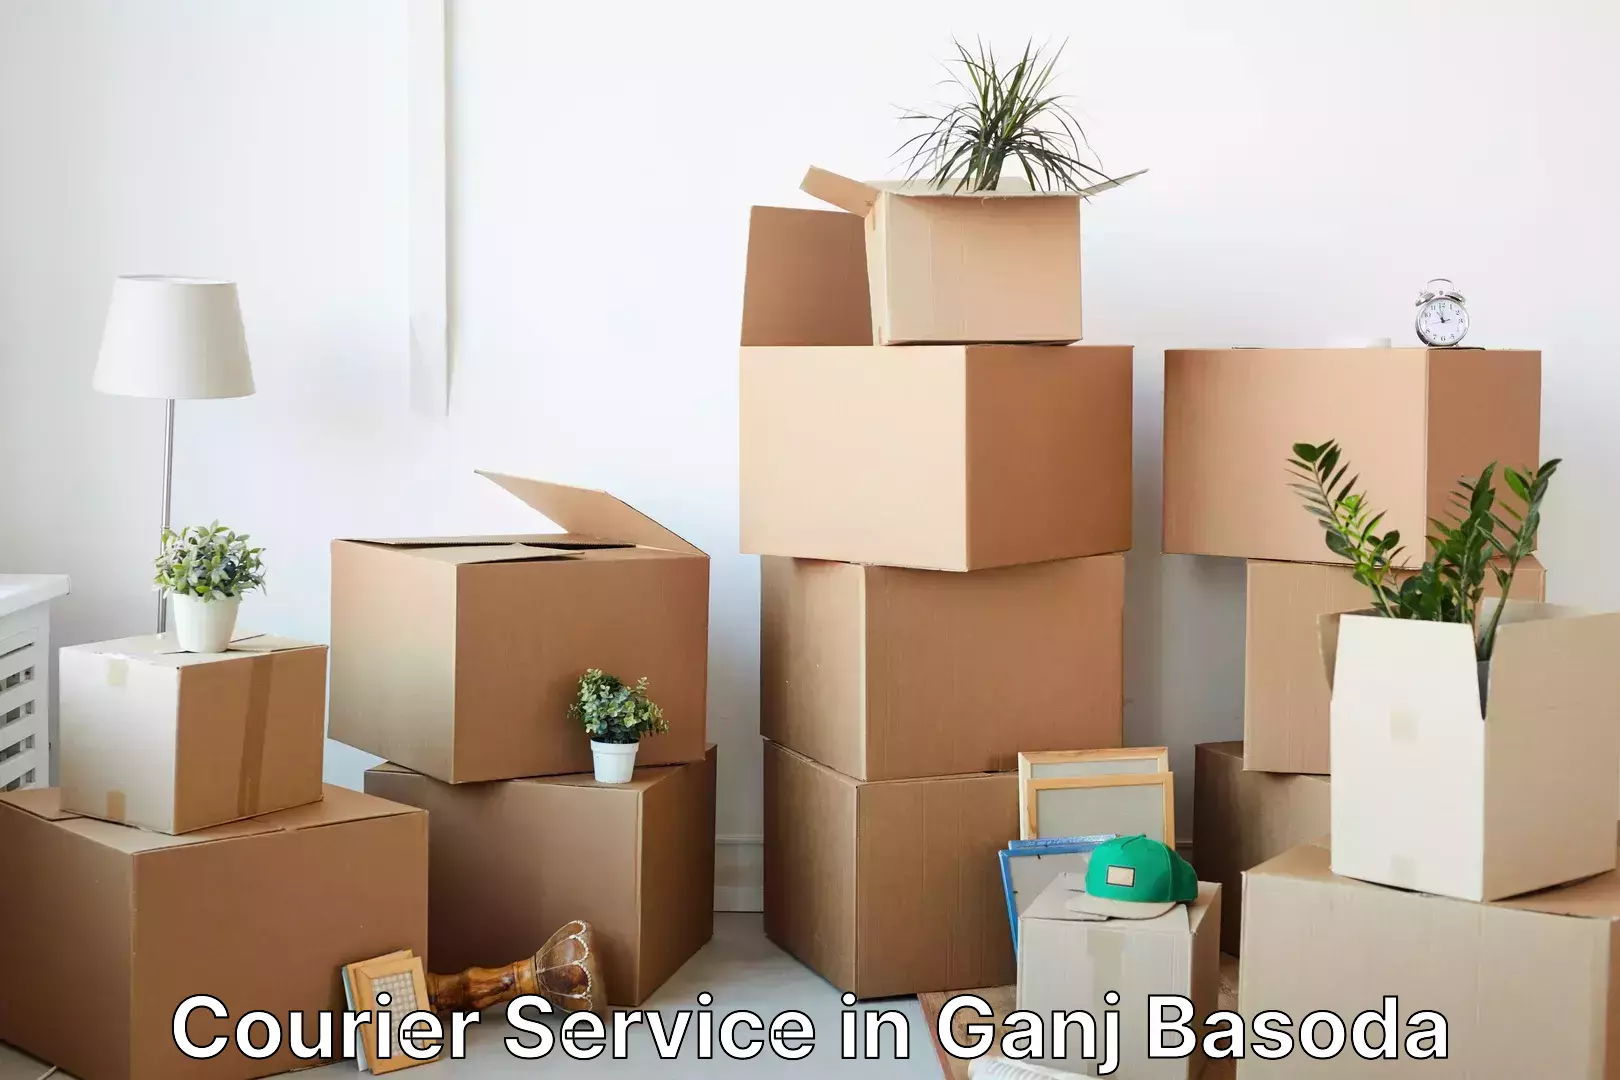 Courier service booking in Ganj Basoda